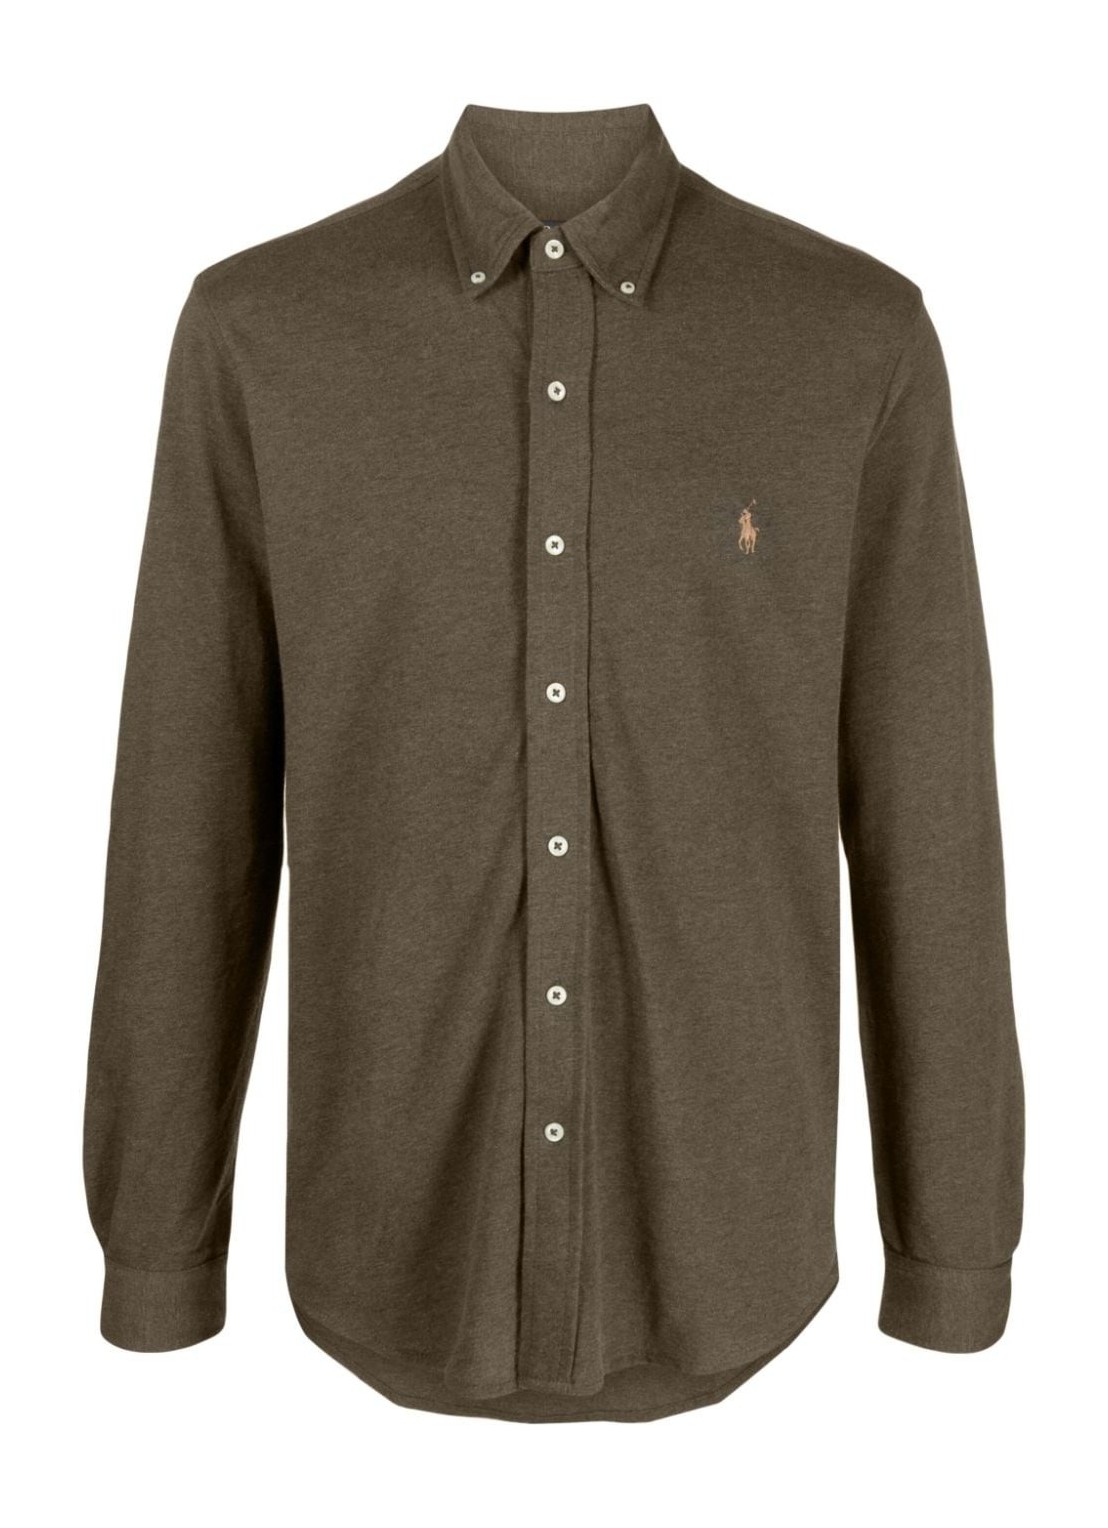 Camiseria polo ralph lauren shirt man lsfbbdm5-long sleeve-knit 710654408111 wilson olive heather c8